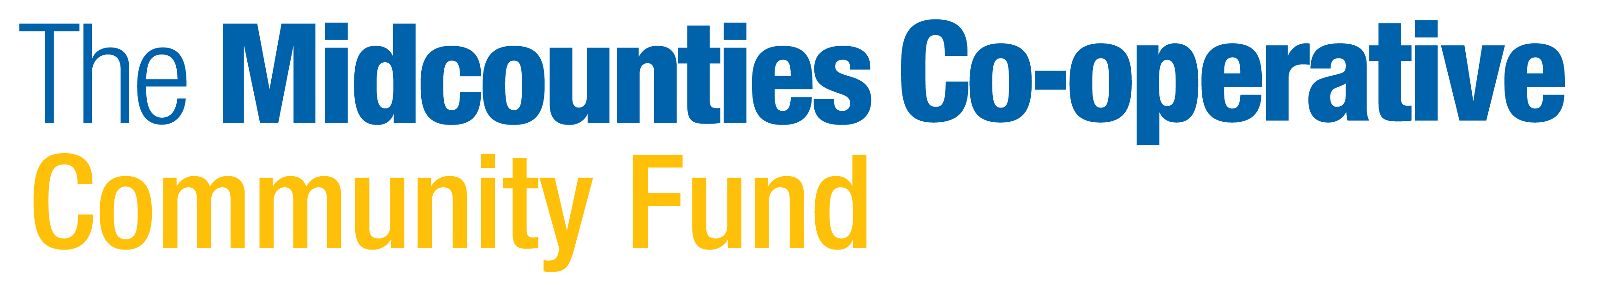 mid coop community fund logo